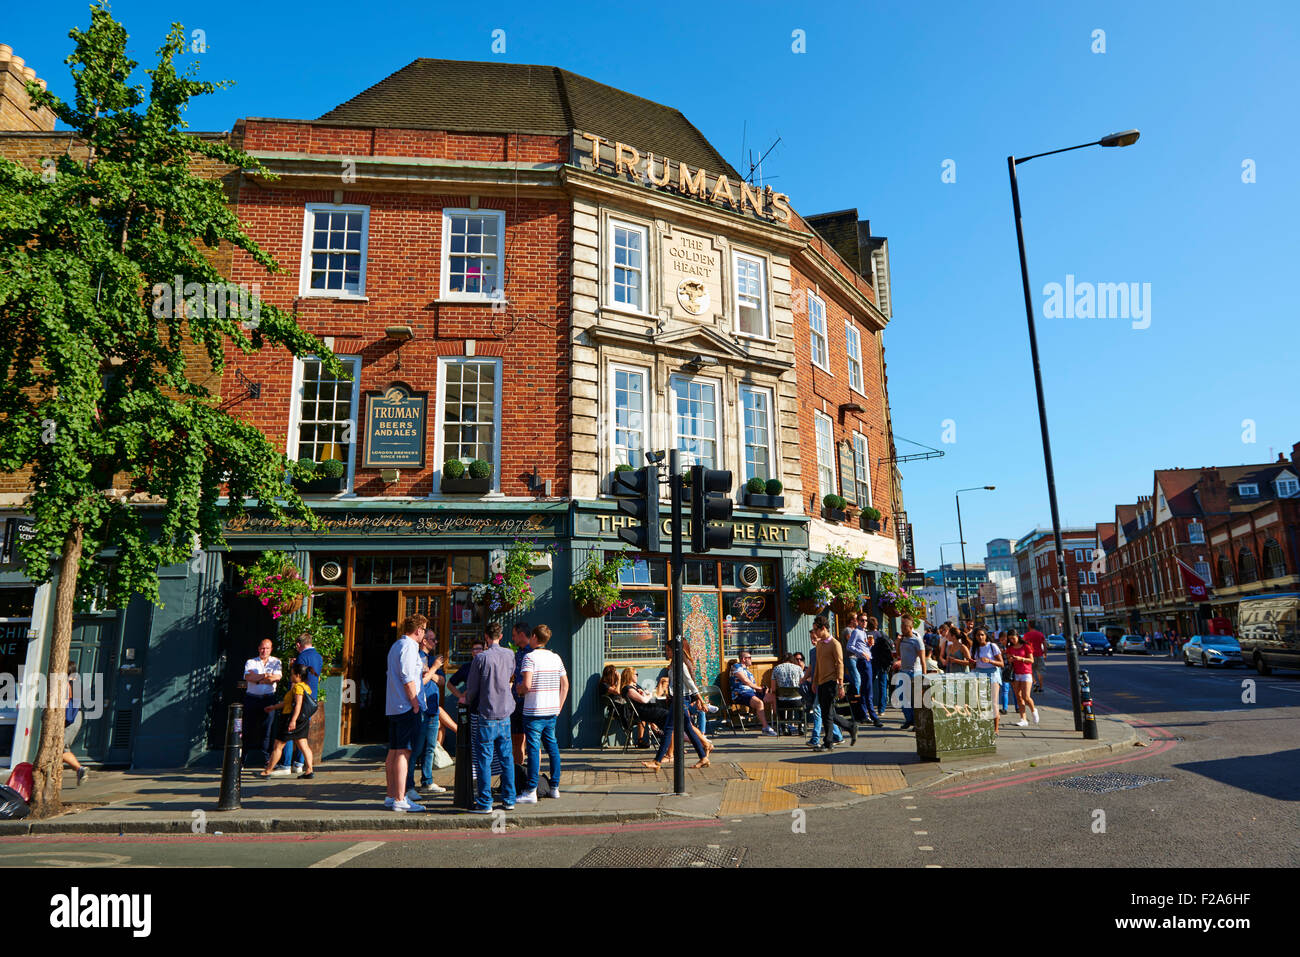 The Golden Heart, Truman's Pub, Commercial St, London, United Kingdom, Europe Stock Photo